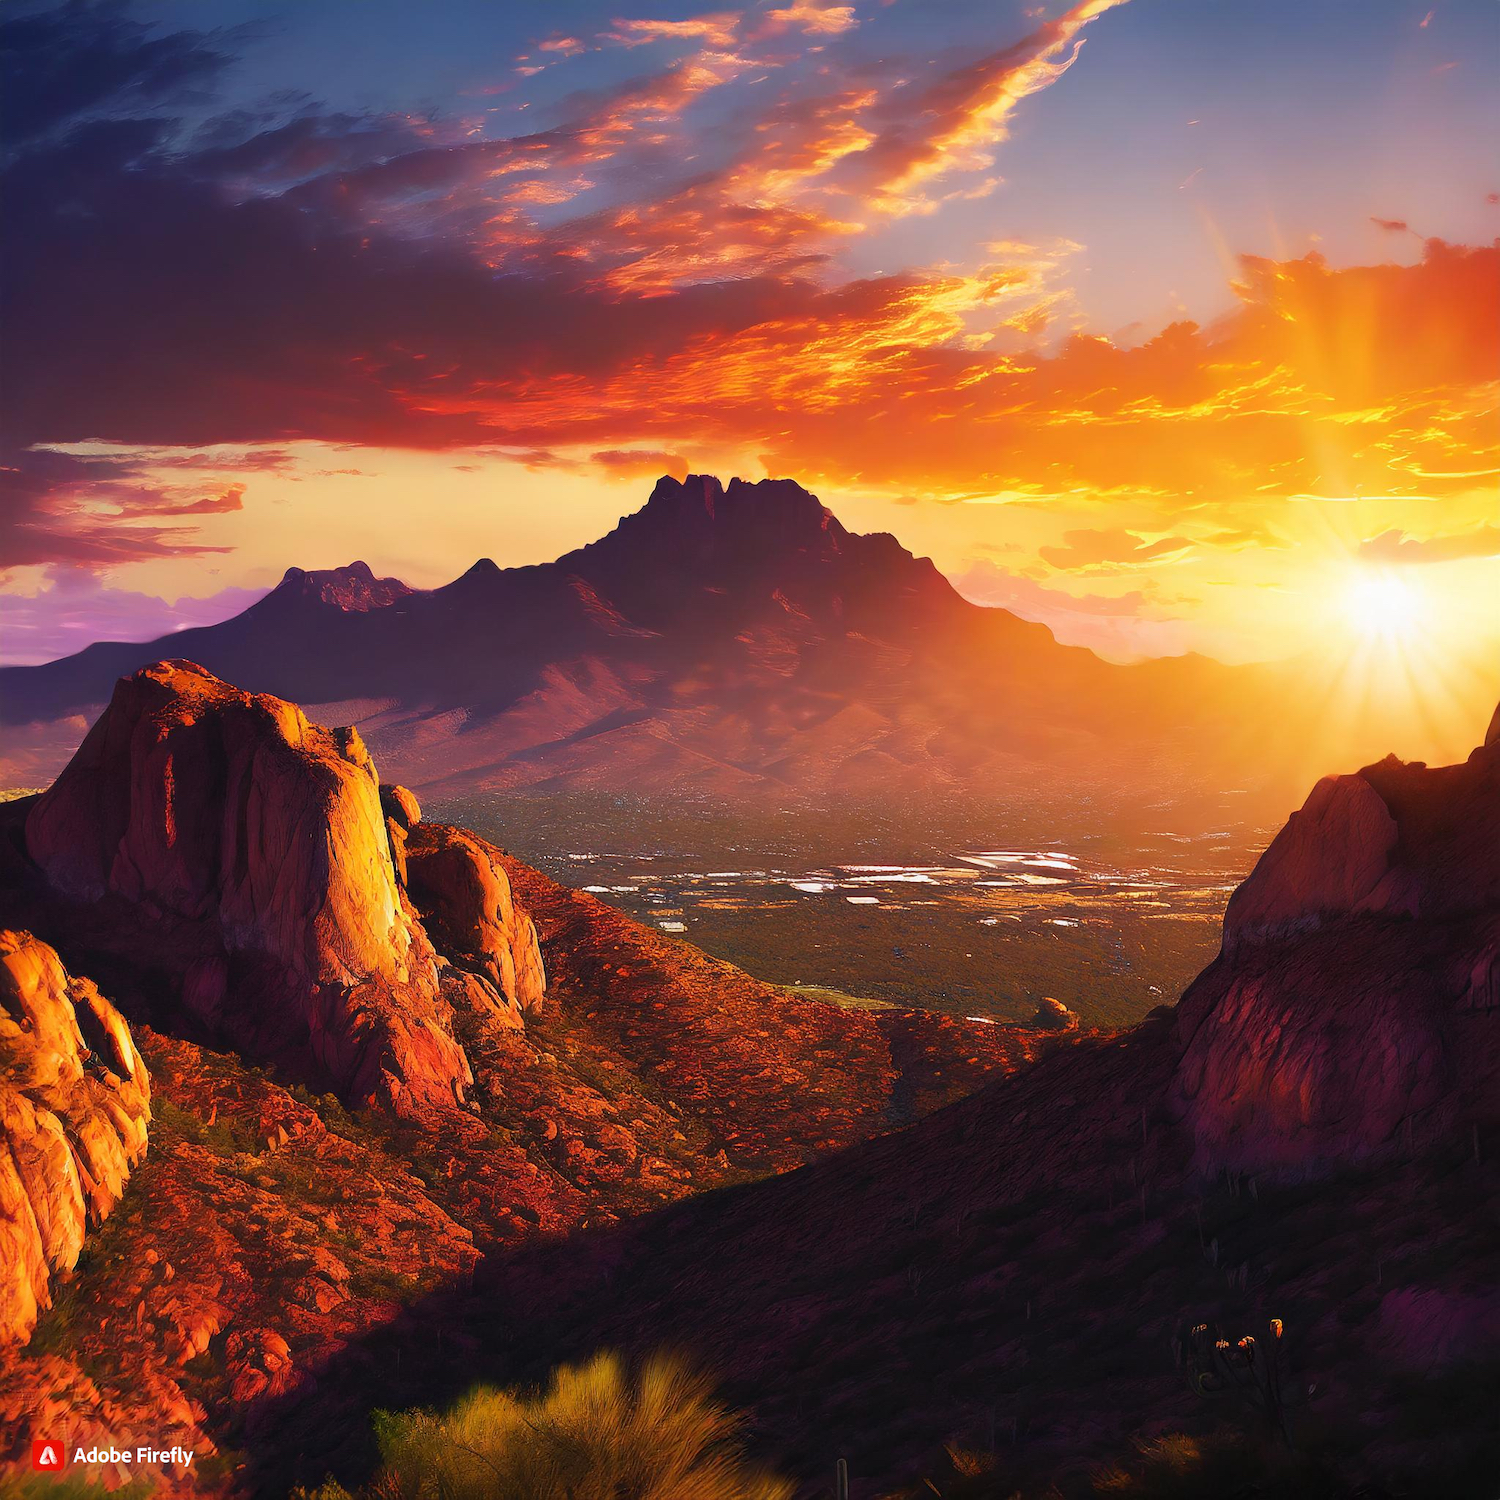 mountain sunset view of Phoenix, Arizona